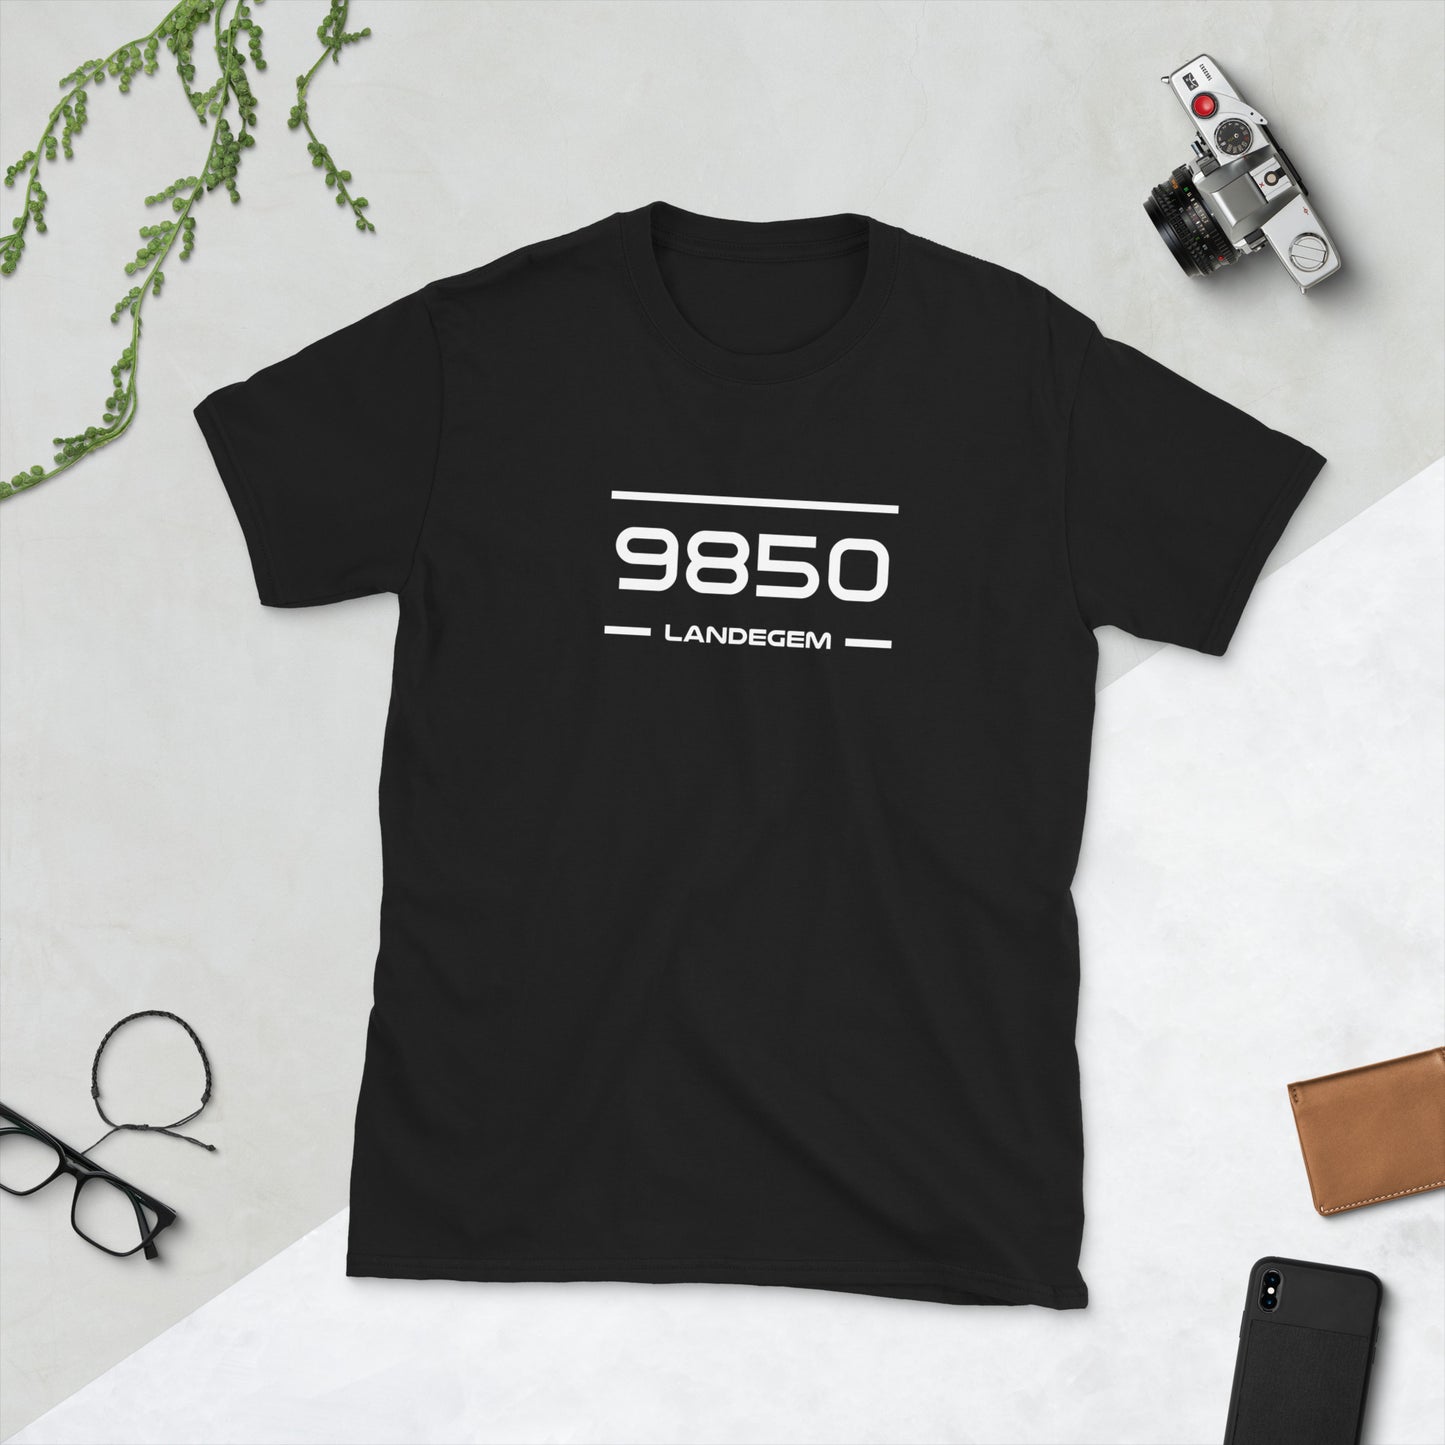 Tshirt - 9850 - Landegem